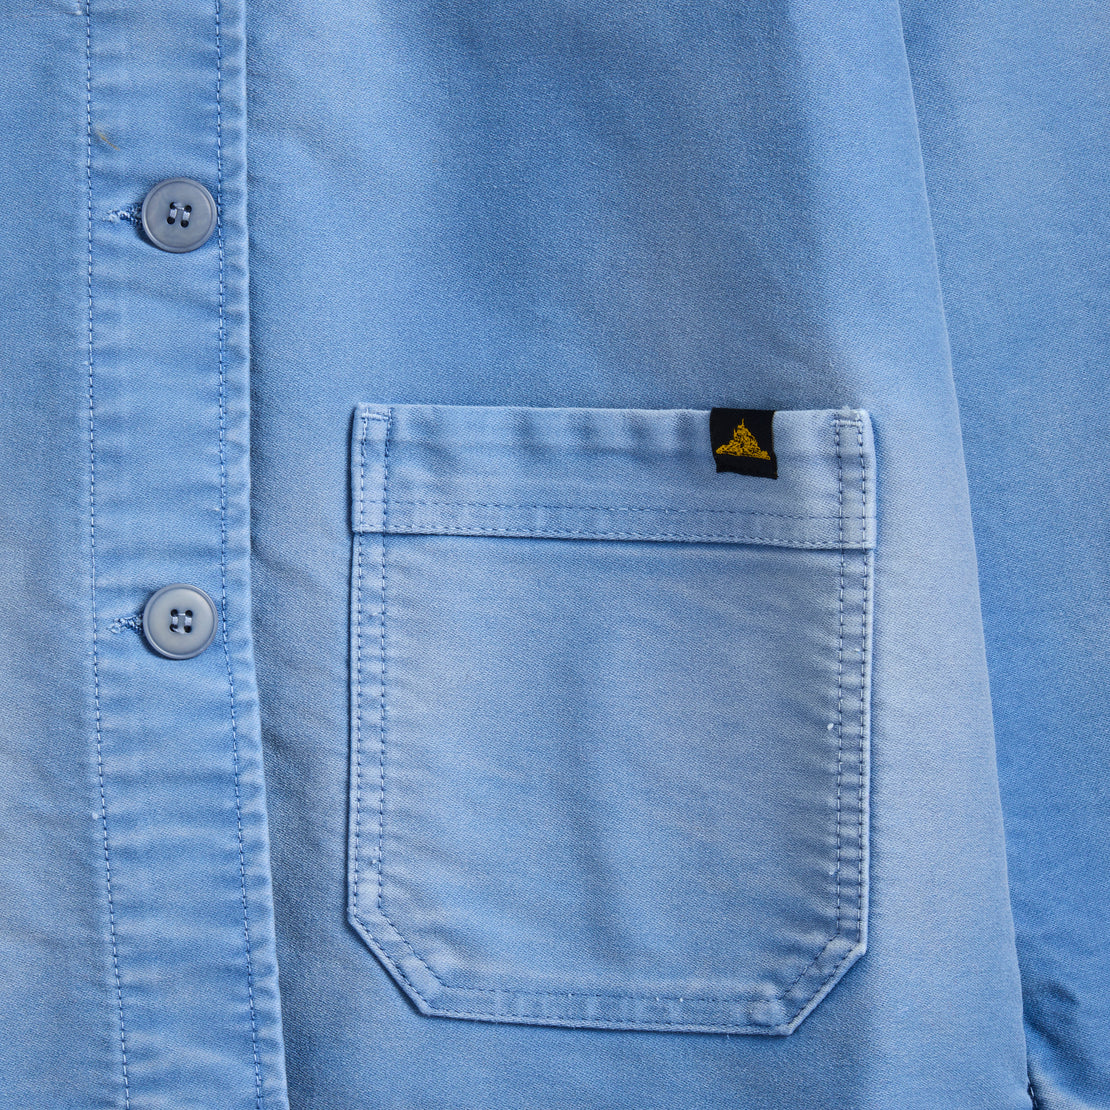 Vintage Washed Work Jacket - Blue - Le Mont Saint Michel - STAG Provisions - W - Outerwear - Coat/Jacket